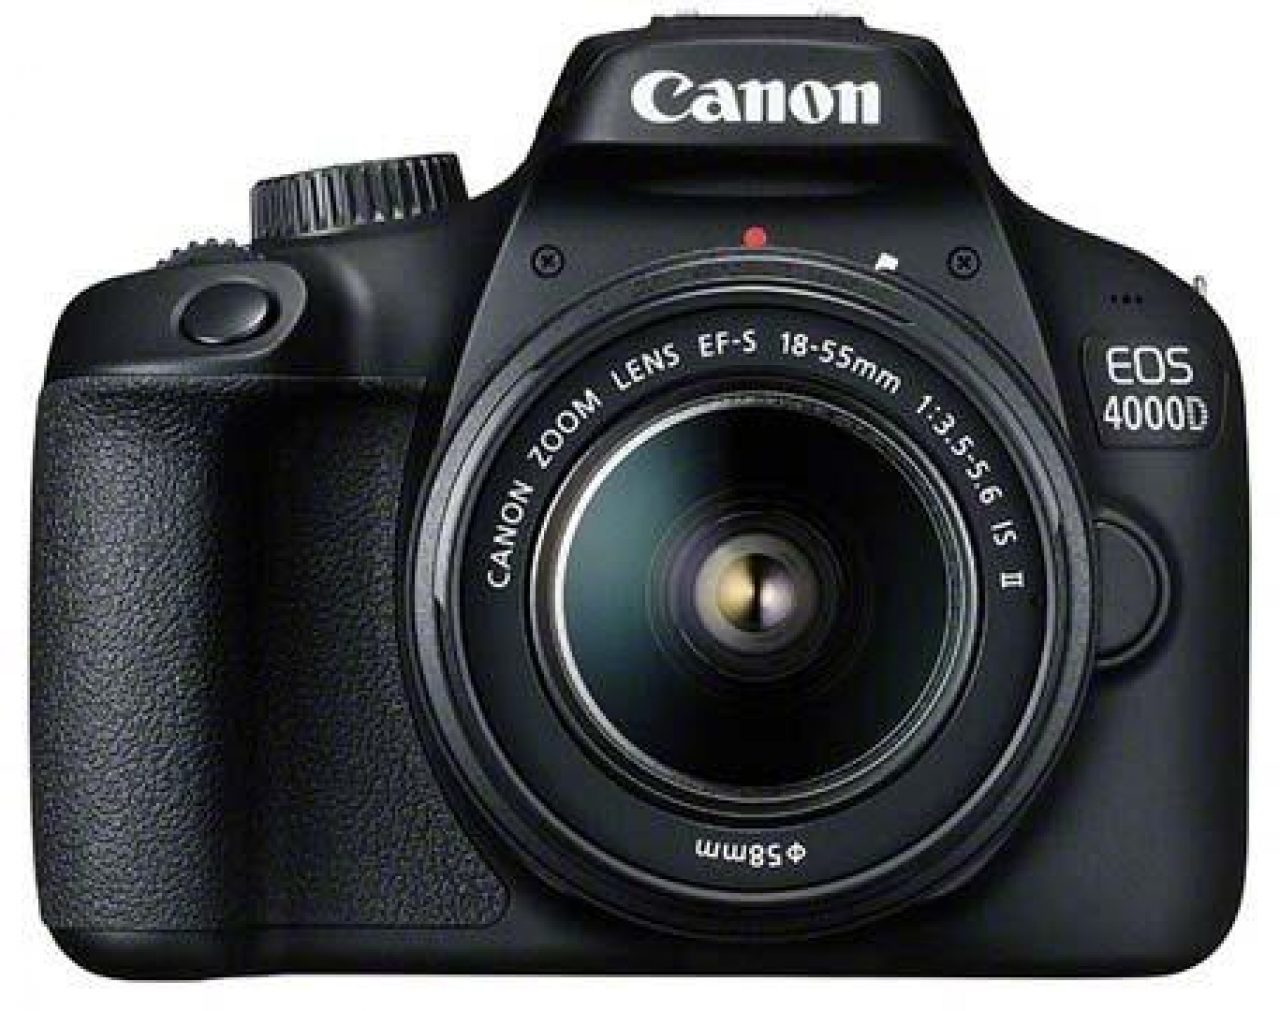 Forvirret Fortæl mig hvile Canon EOS 4000D Review | Photography Blog